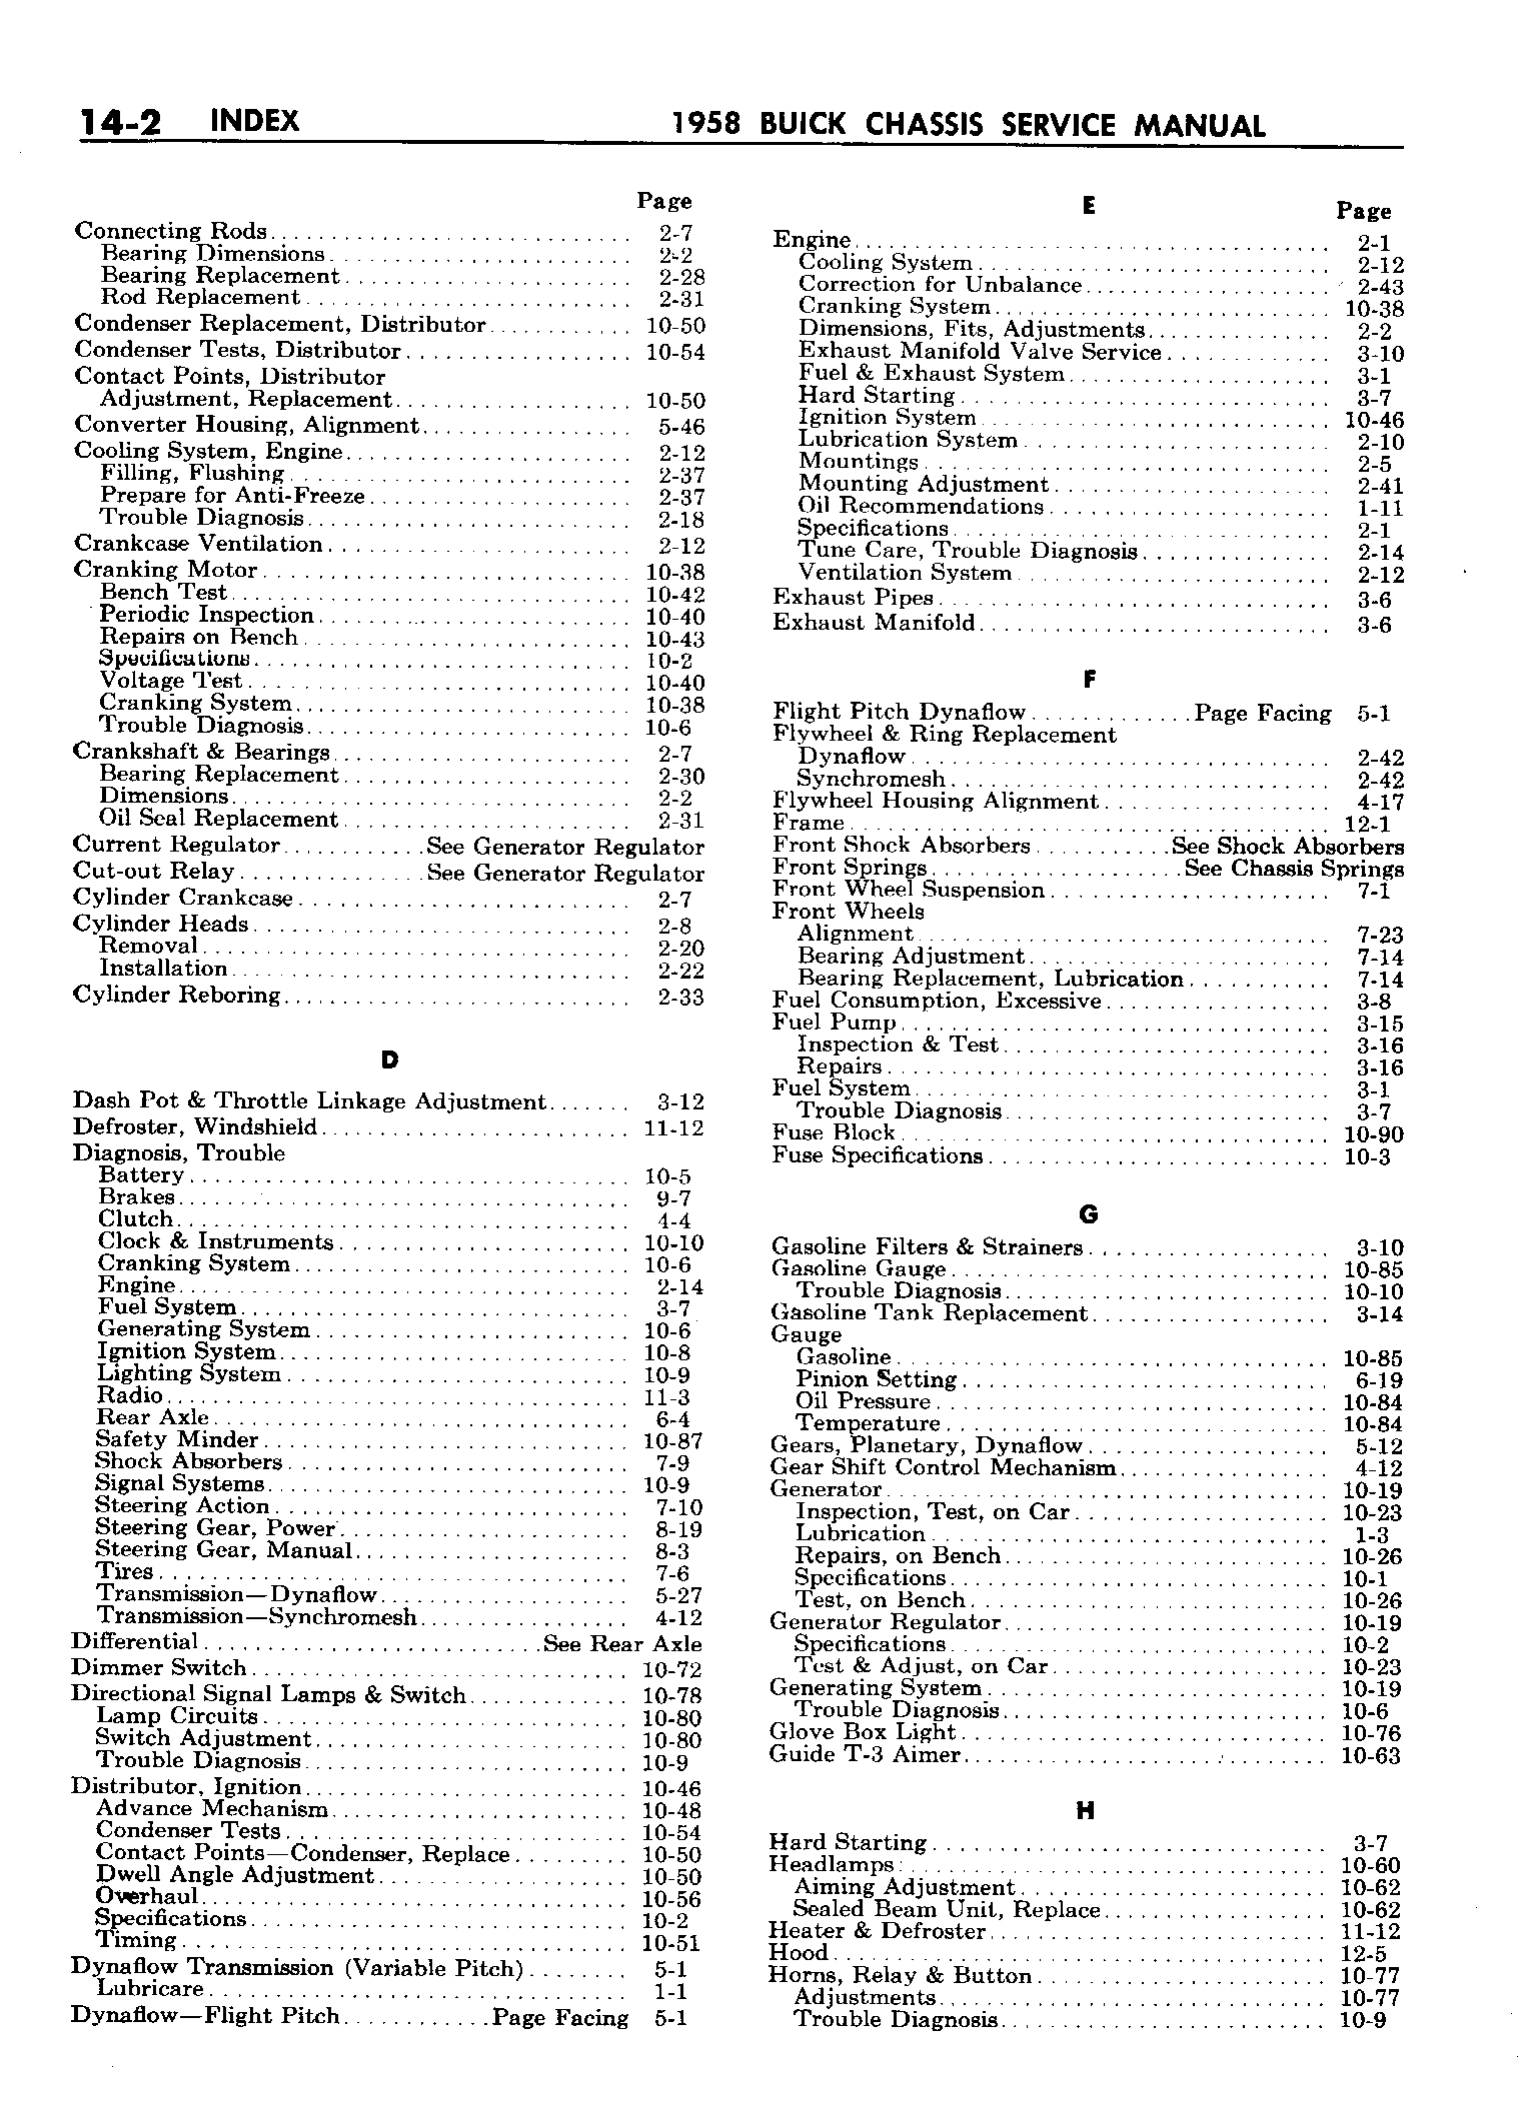 n_14 1958 Buick Shop Manual - Index_2.jpg